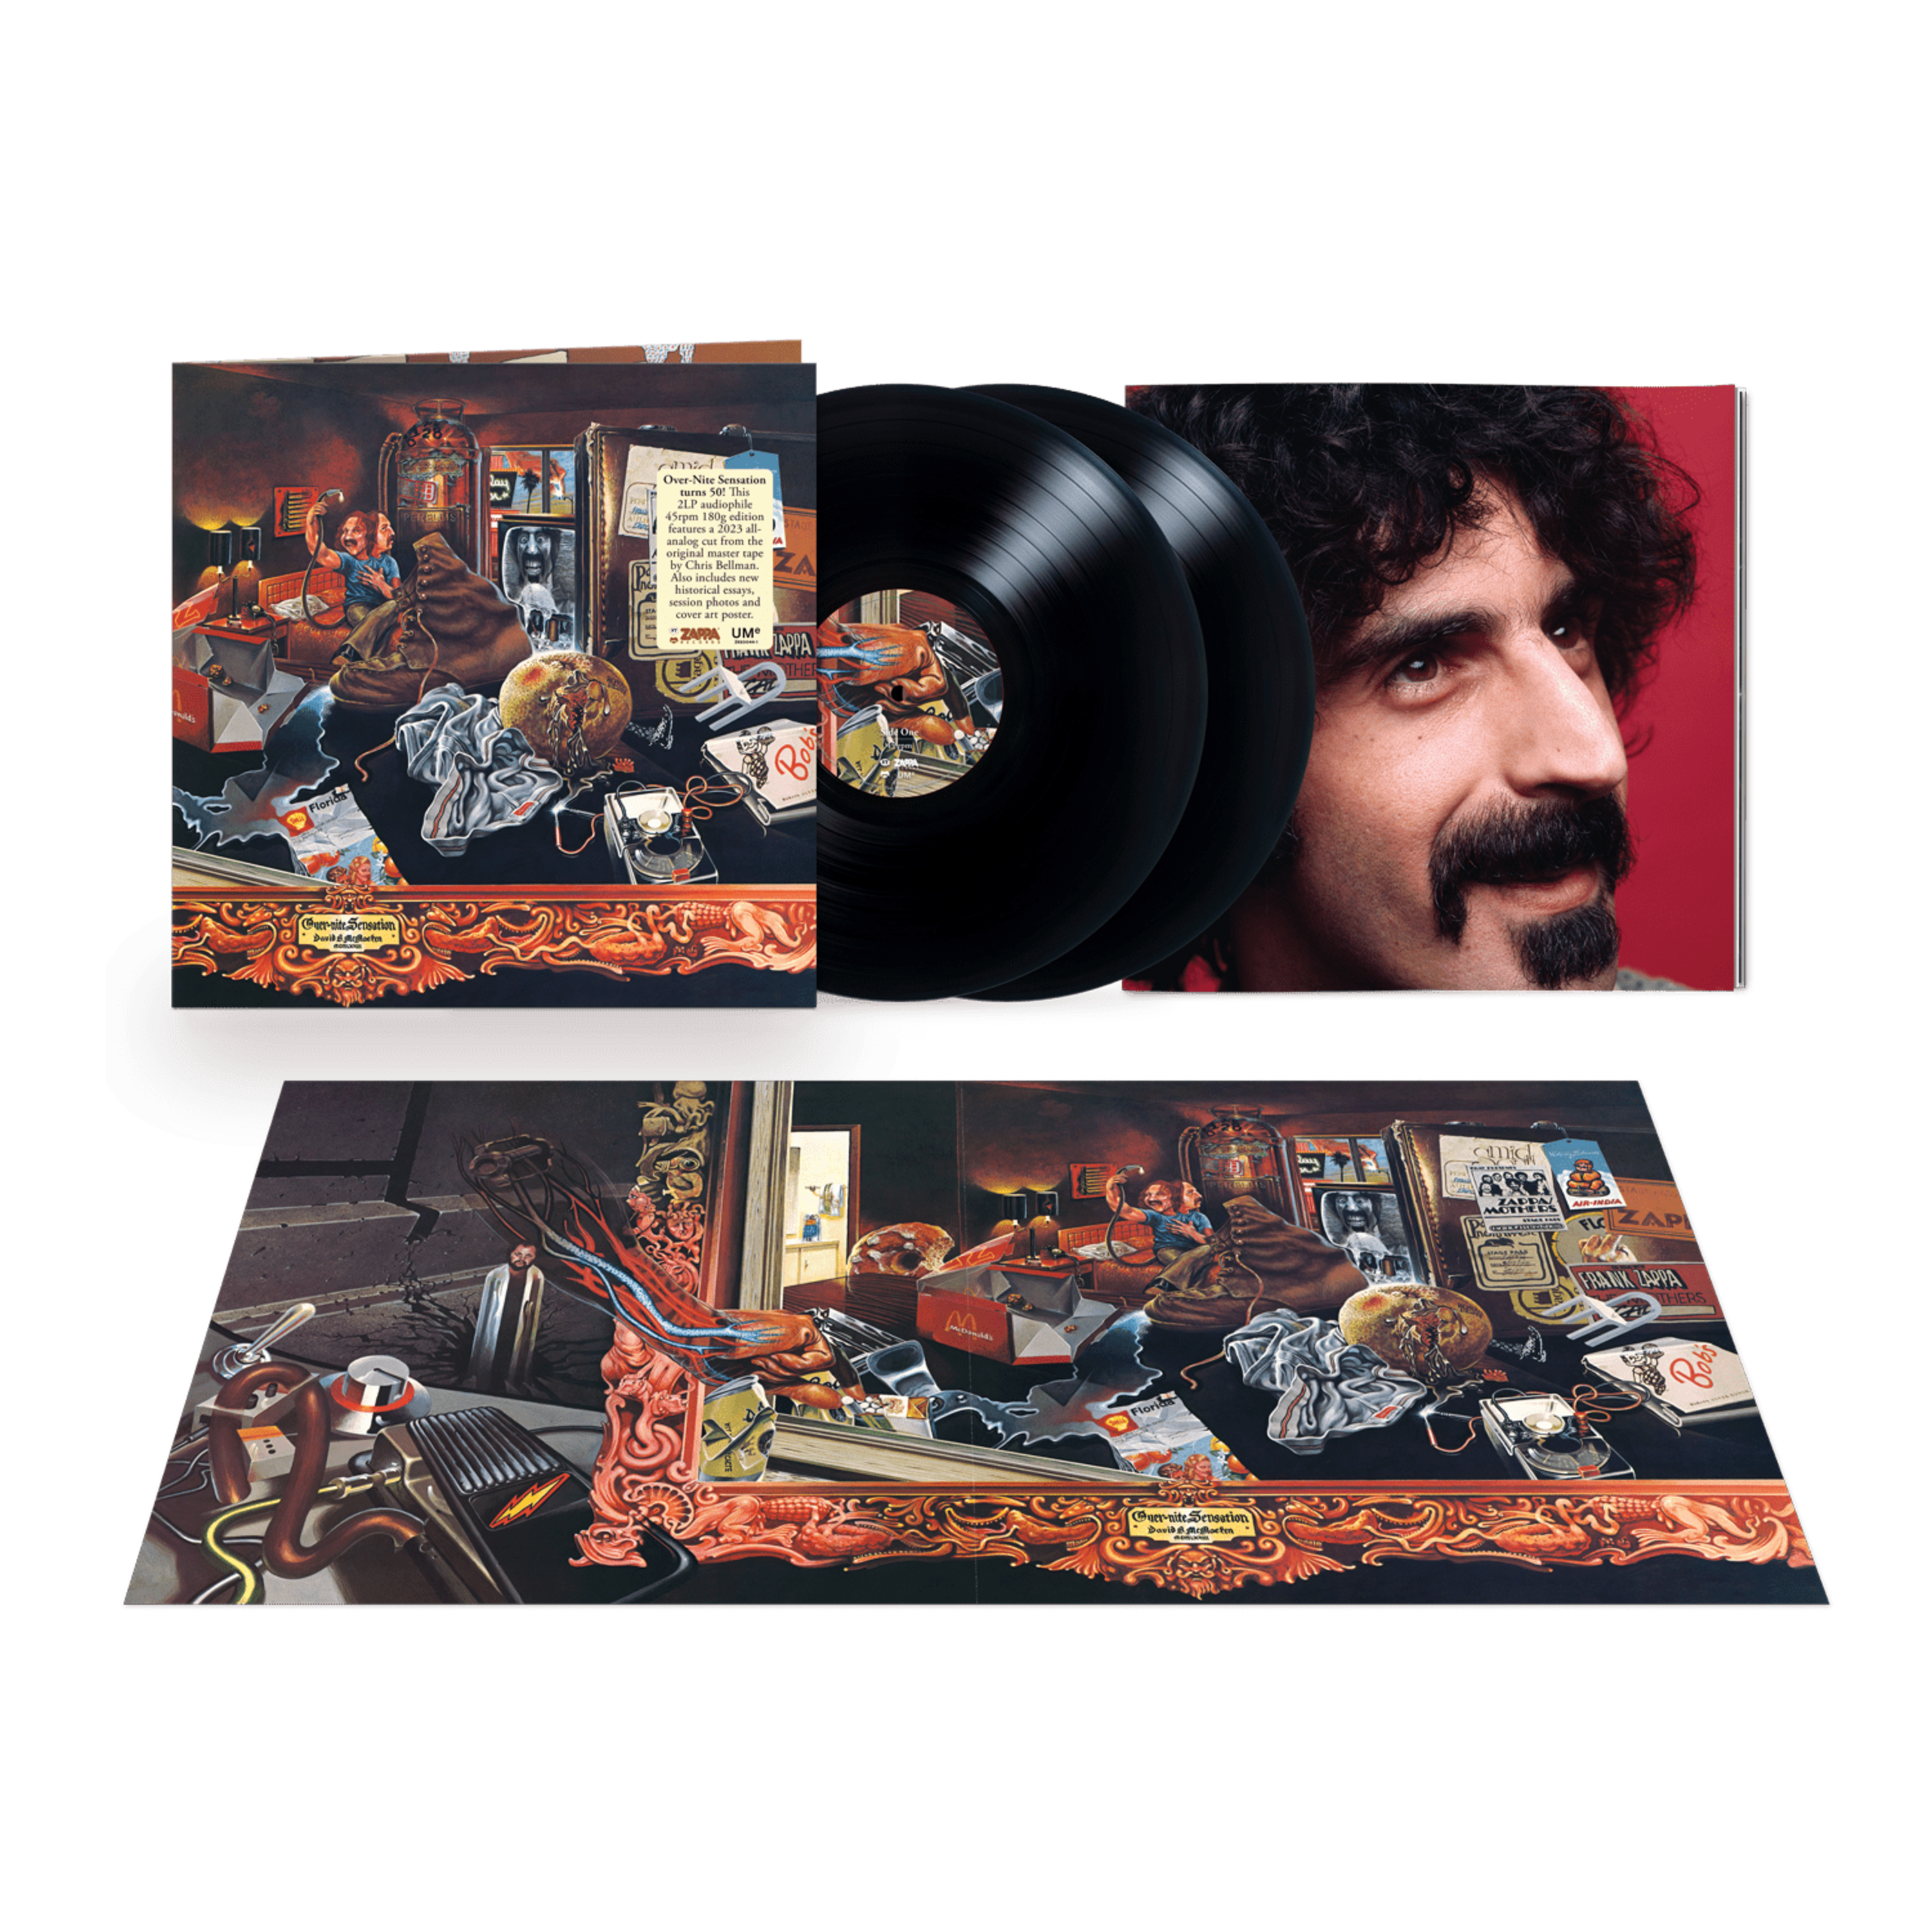 Frank-Zappa-Over-Nite-Sensation-50th-Vinyl-504598-398732.png